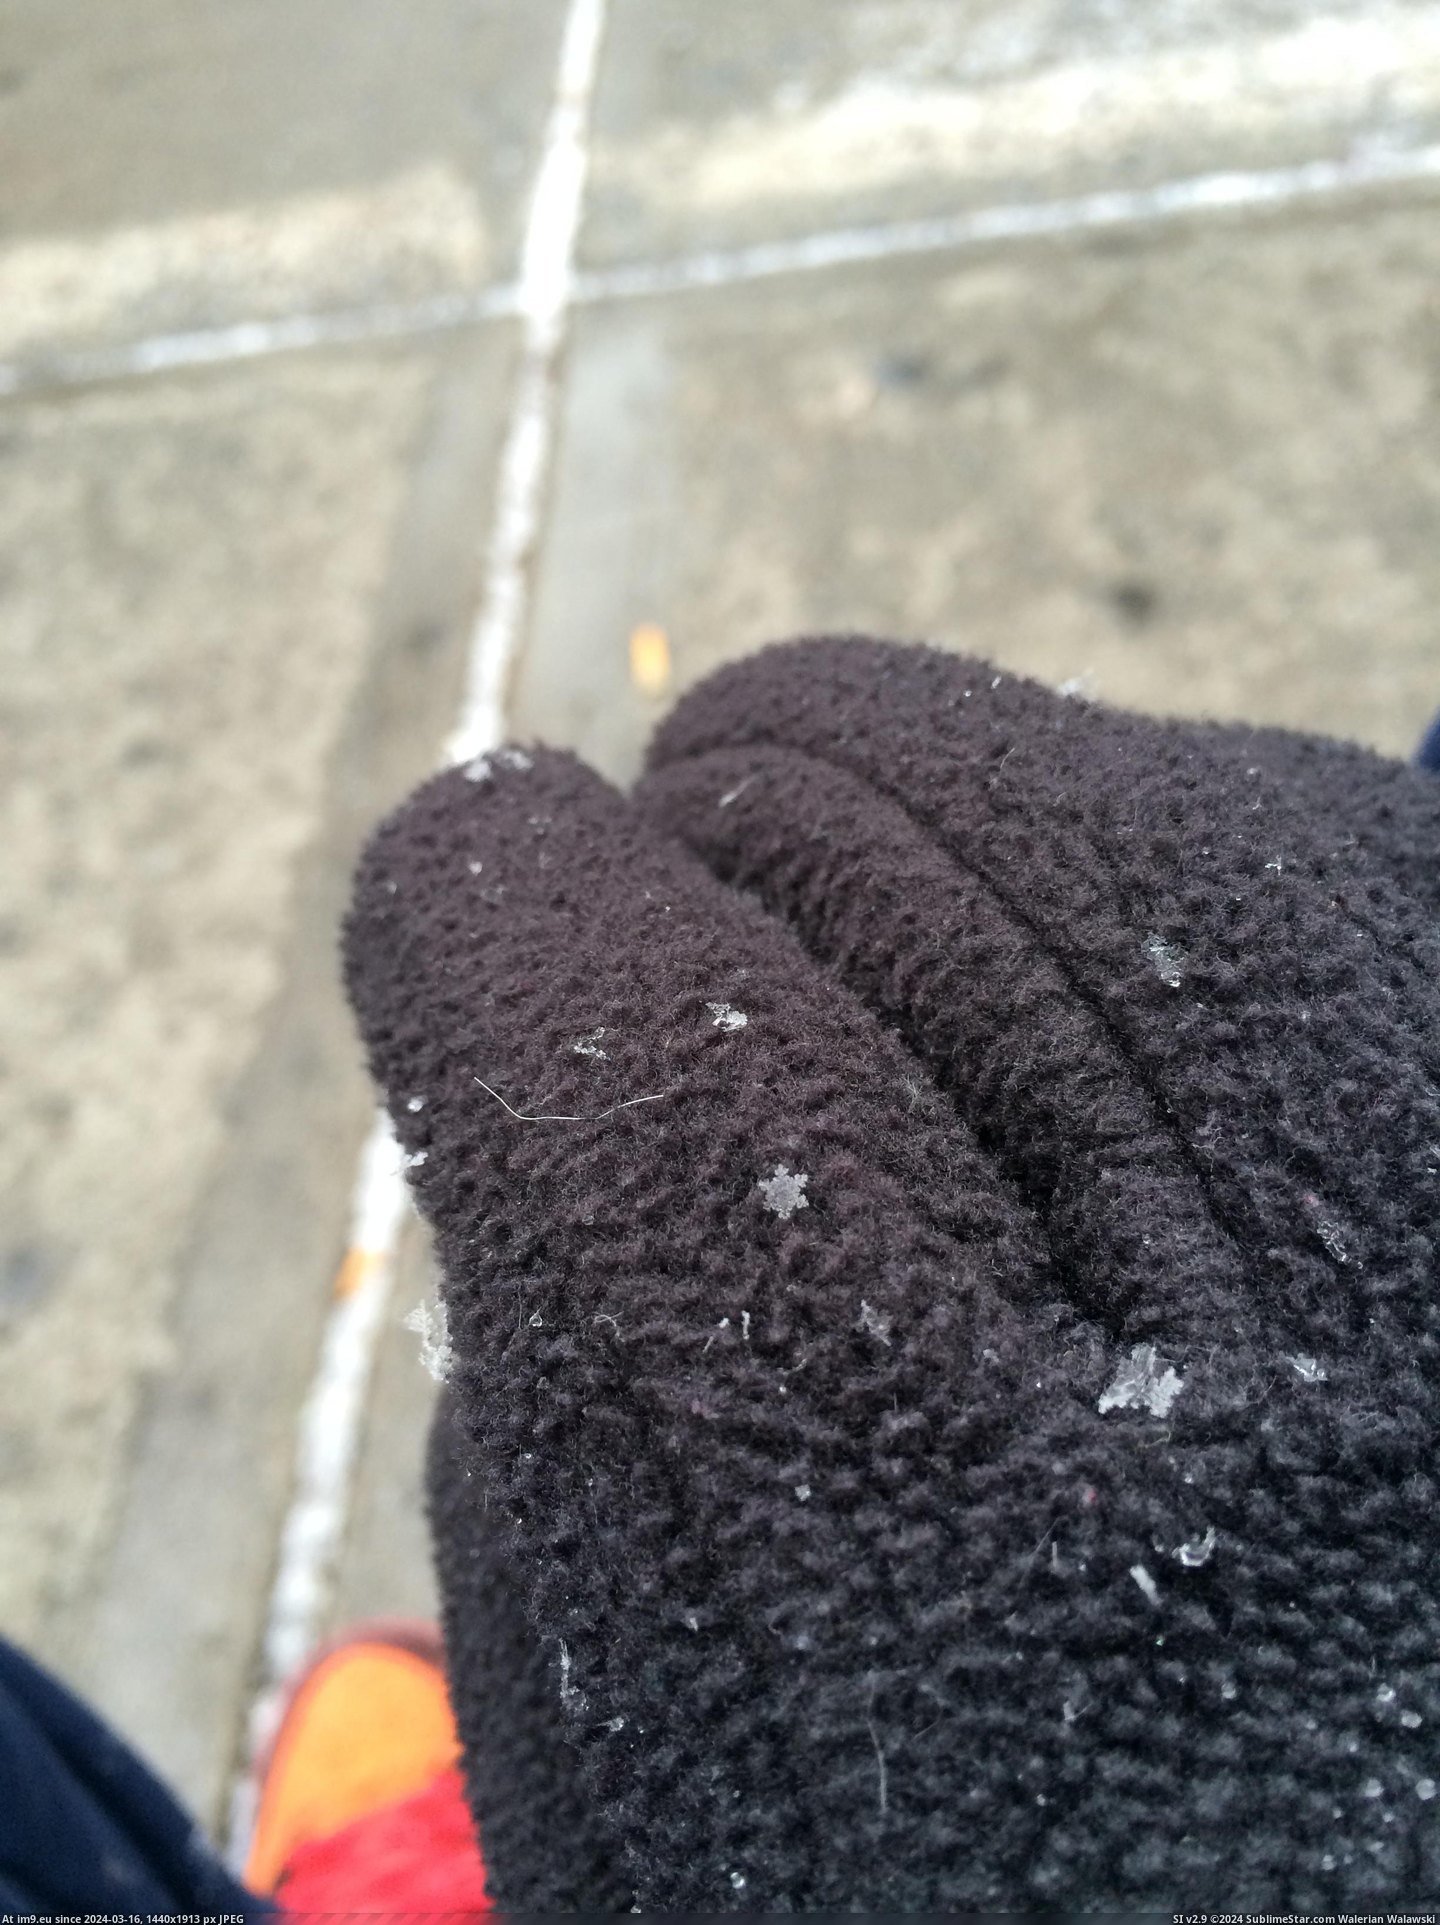 #Perfect #Landed #Glove #Snowflake [Pics] A near-perfect snowflake just landed on my glove Pic. (Obraz z album My r/PICS favs))